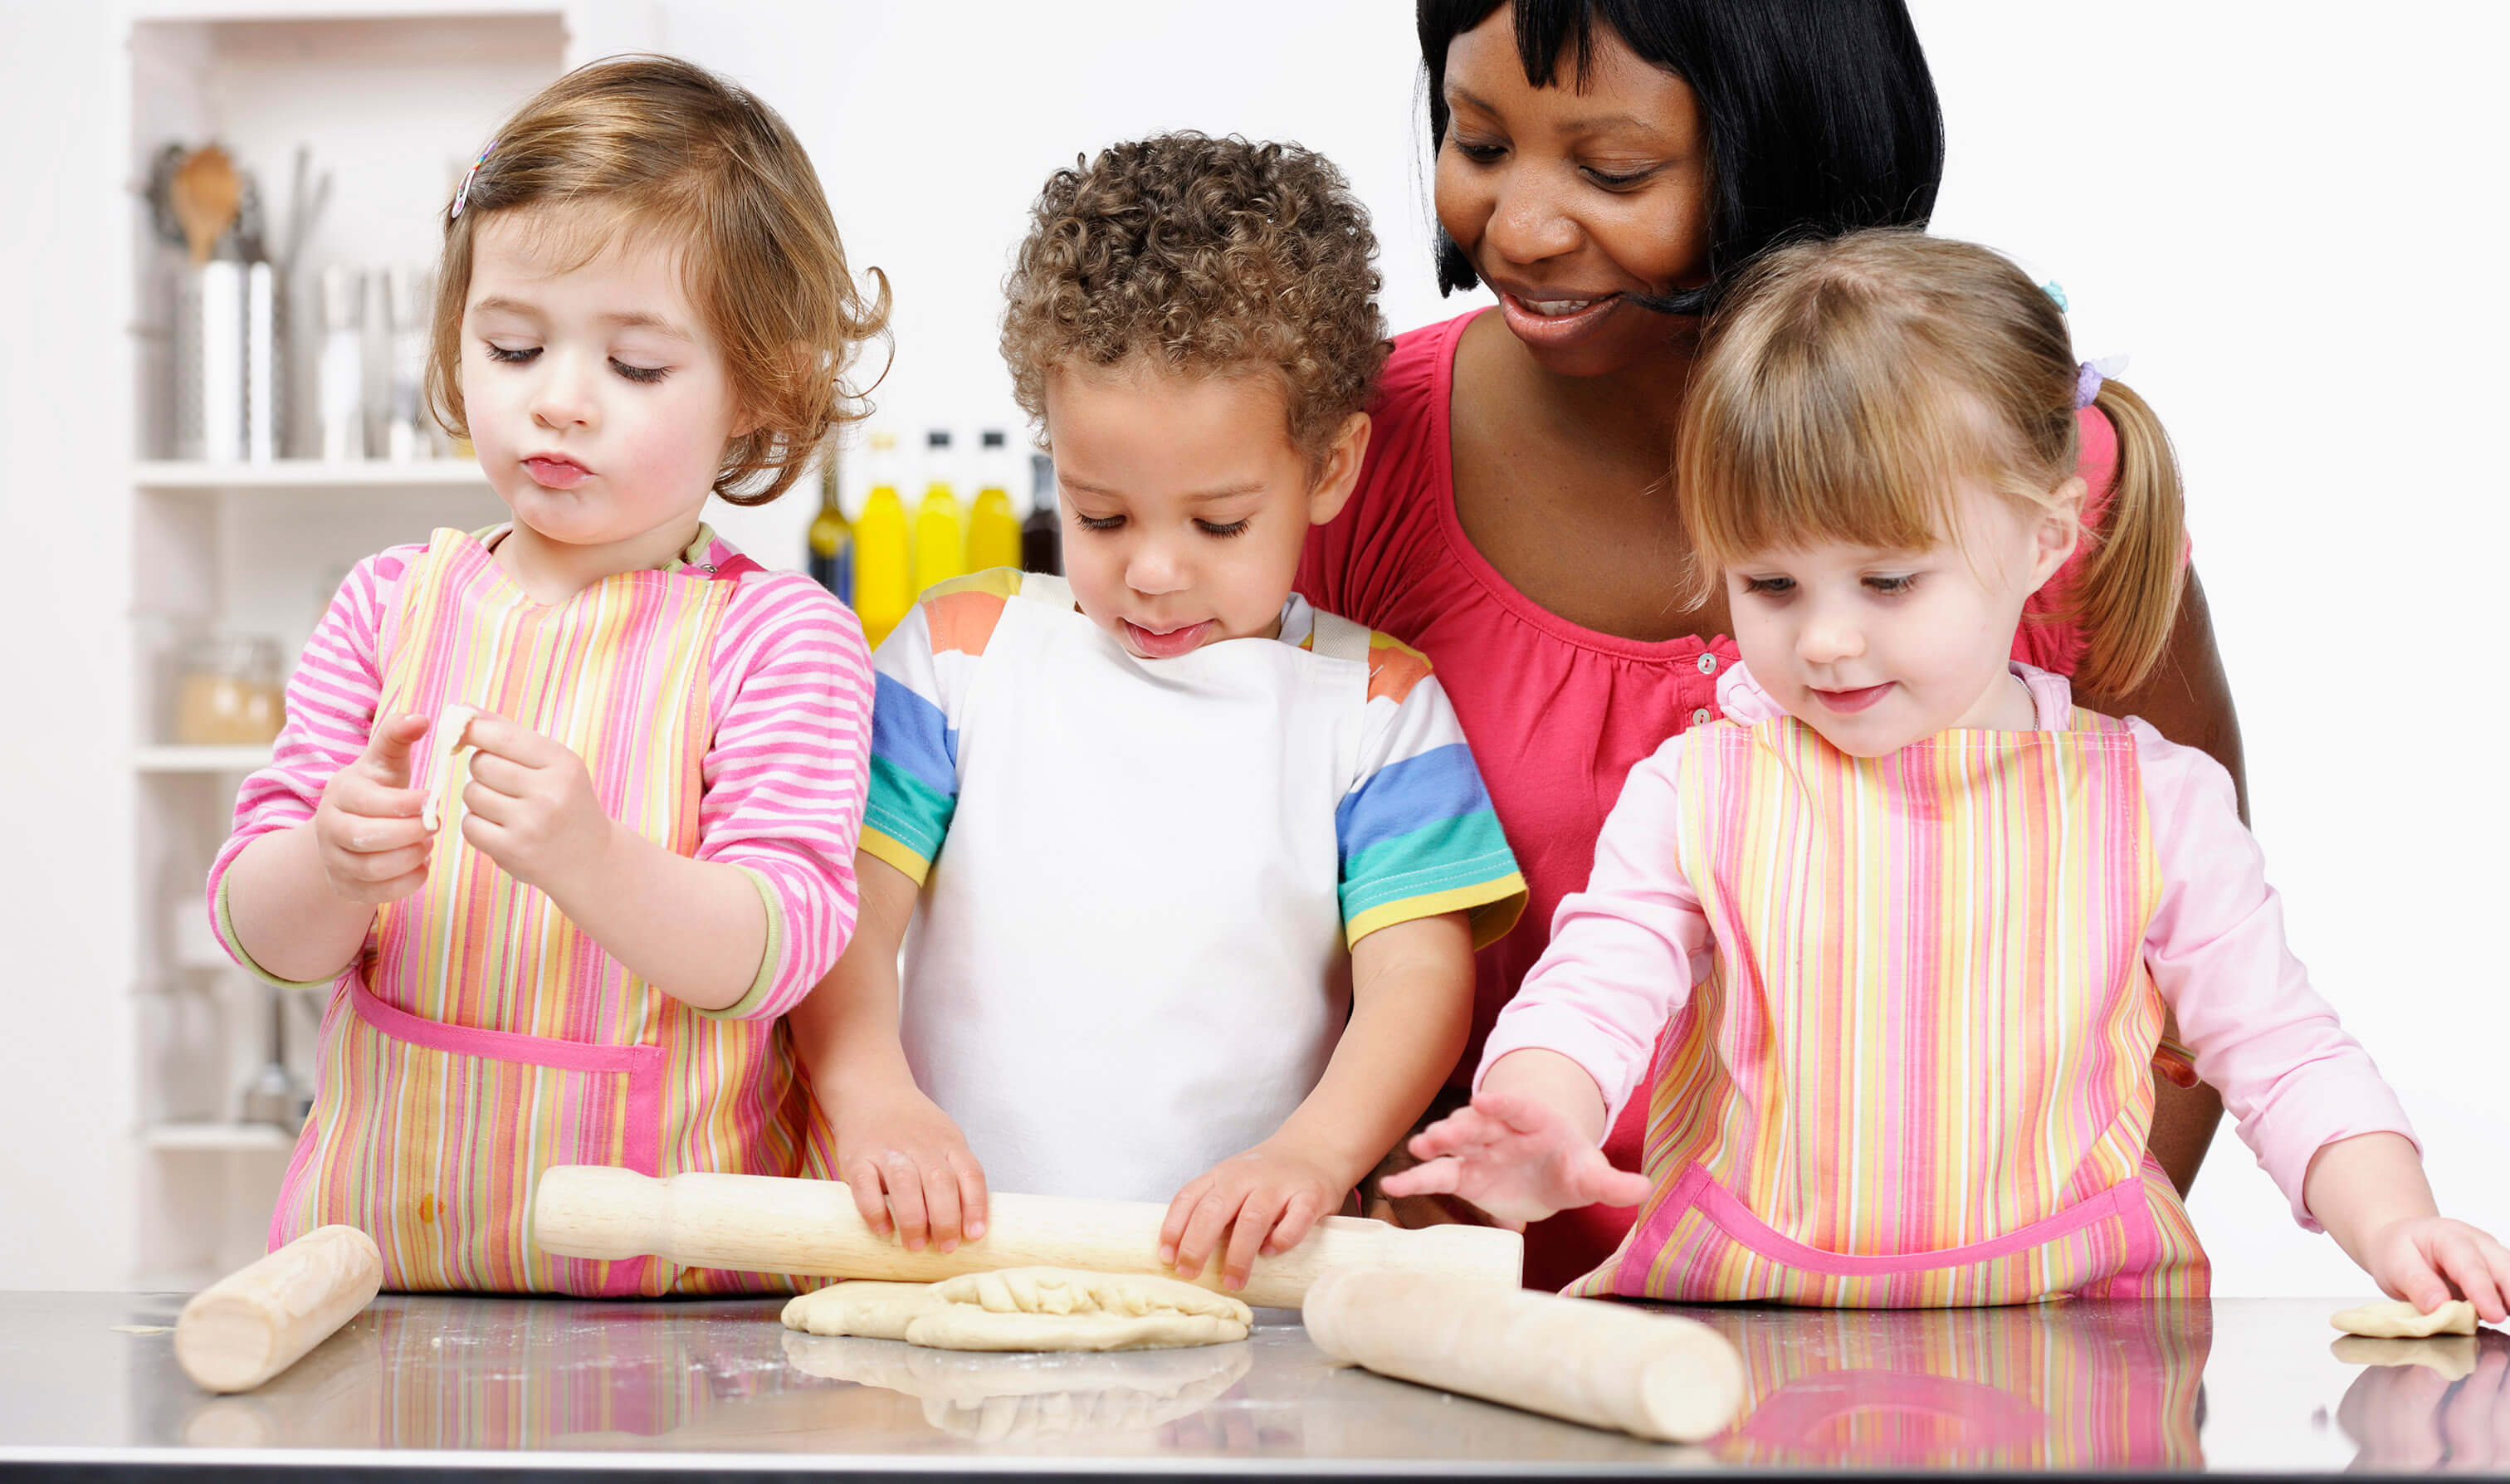 Child care provider helping three children roll dough